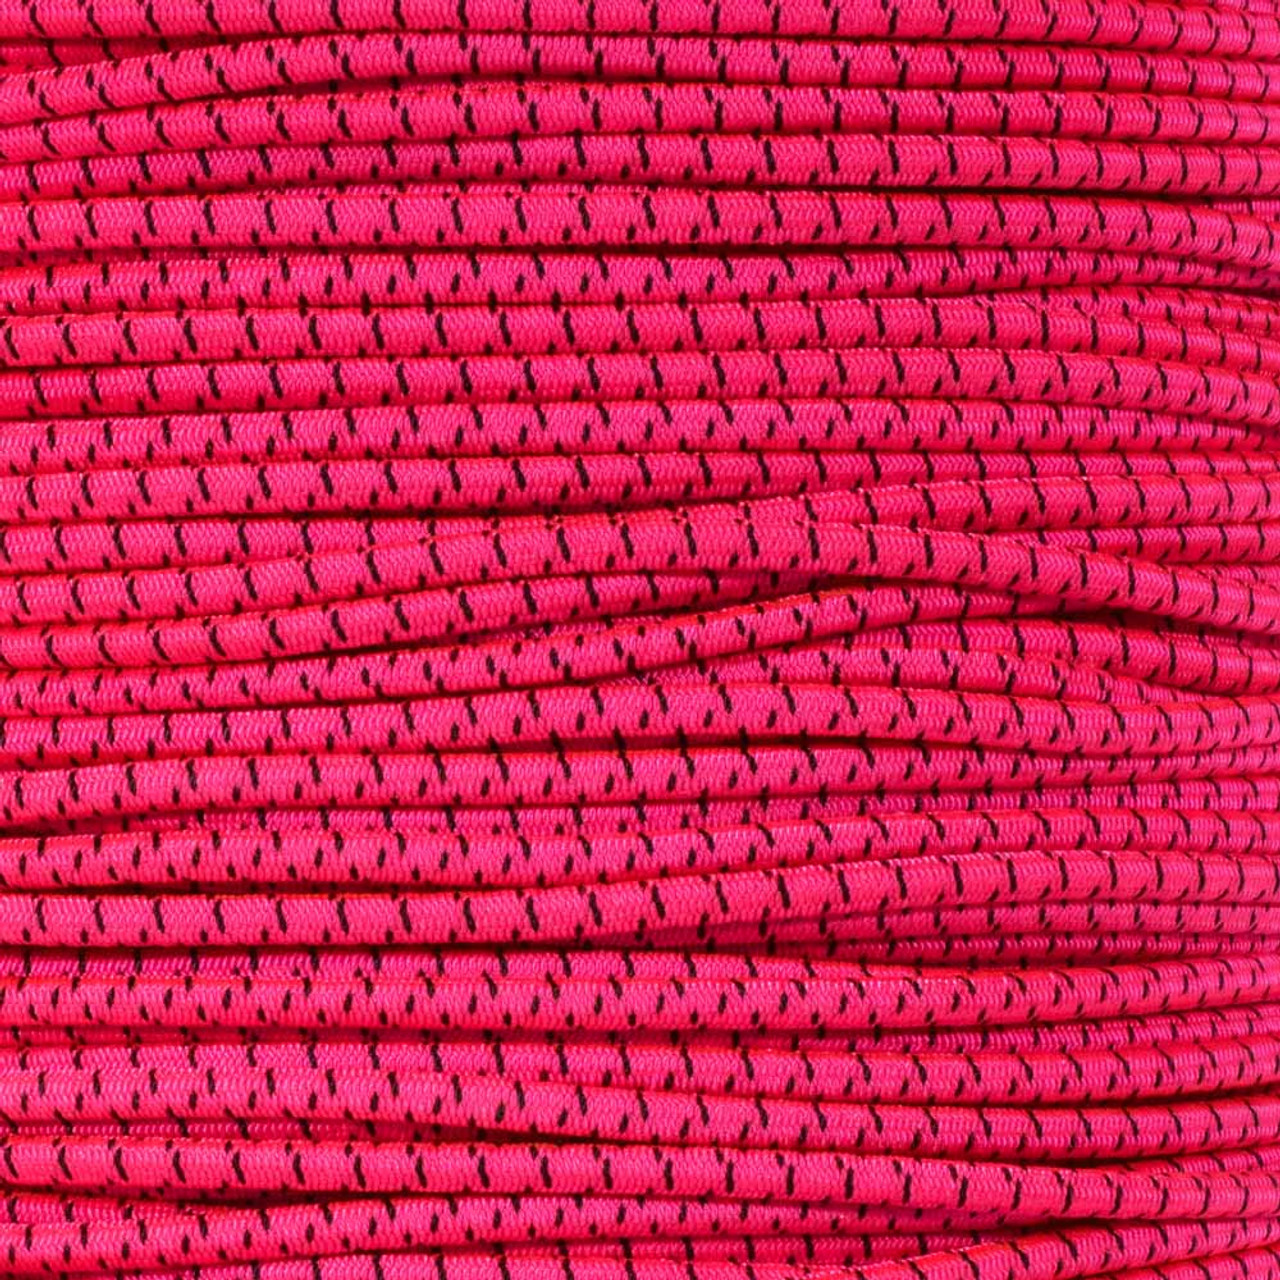 Neon Pink Black 1/8 inch Shock Cord Spools